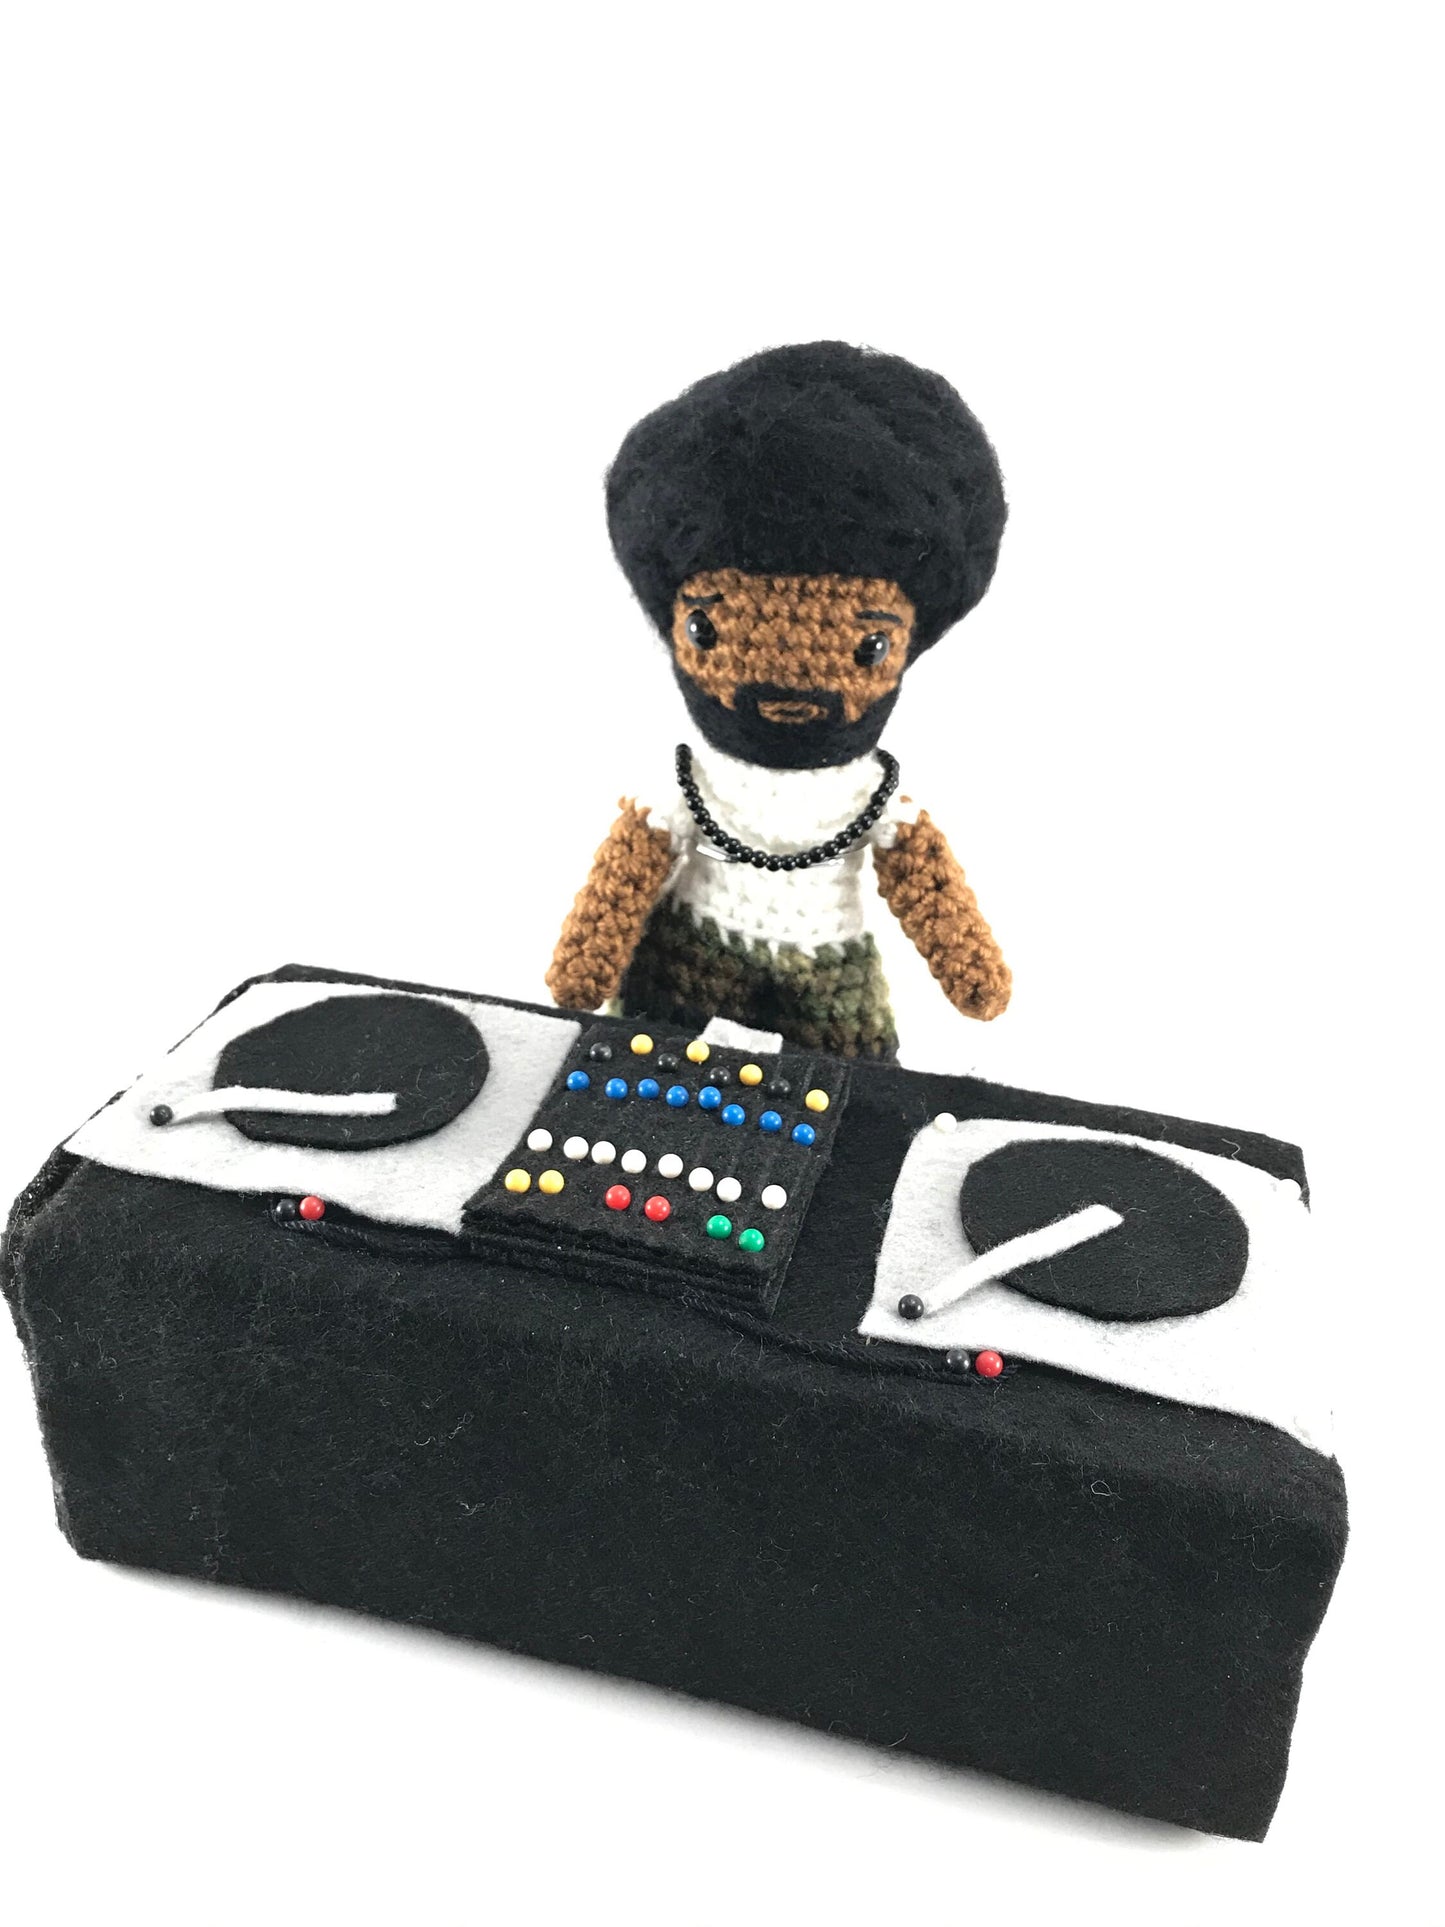 Custom Crochet DJ with decks